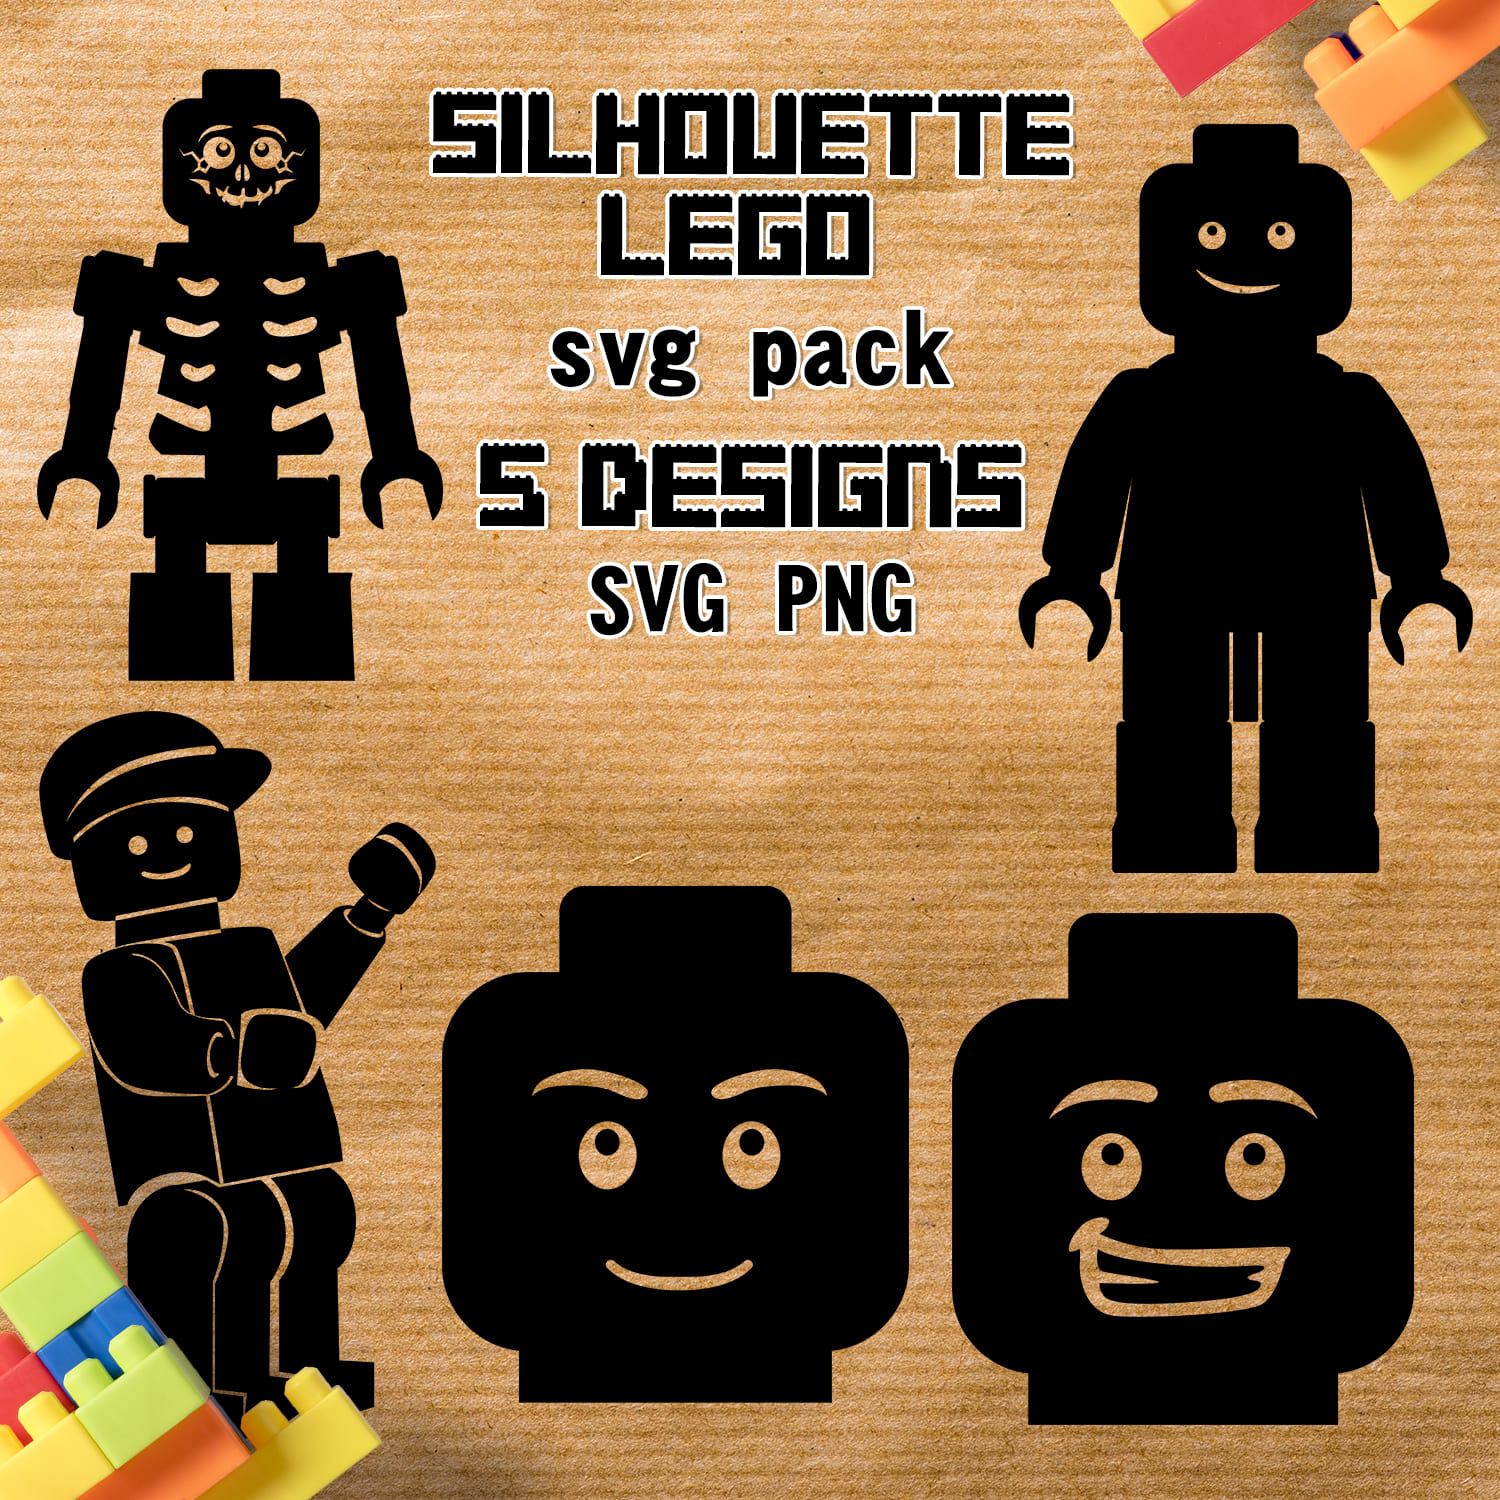 Silhouette Lego SVG T-shirt Designs Bundle - main image preview.